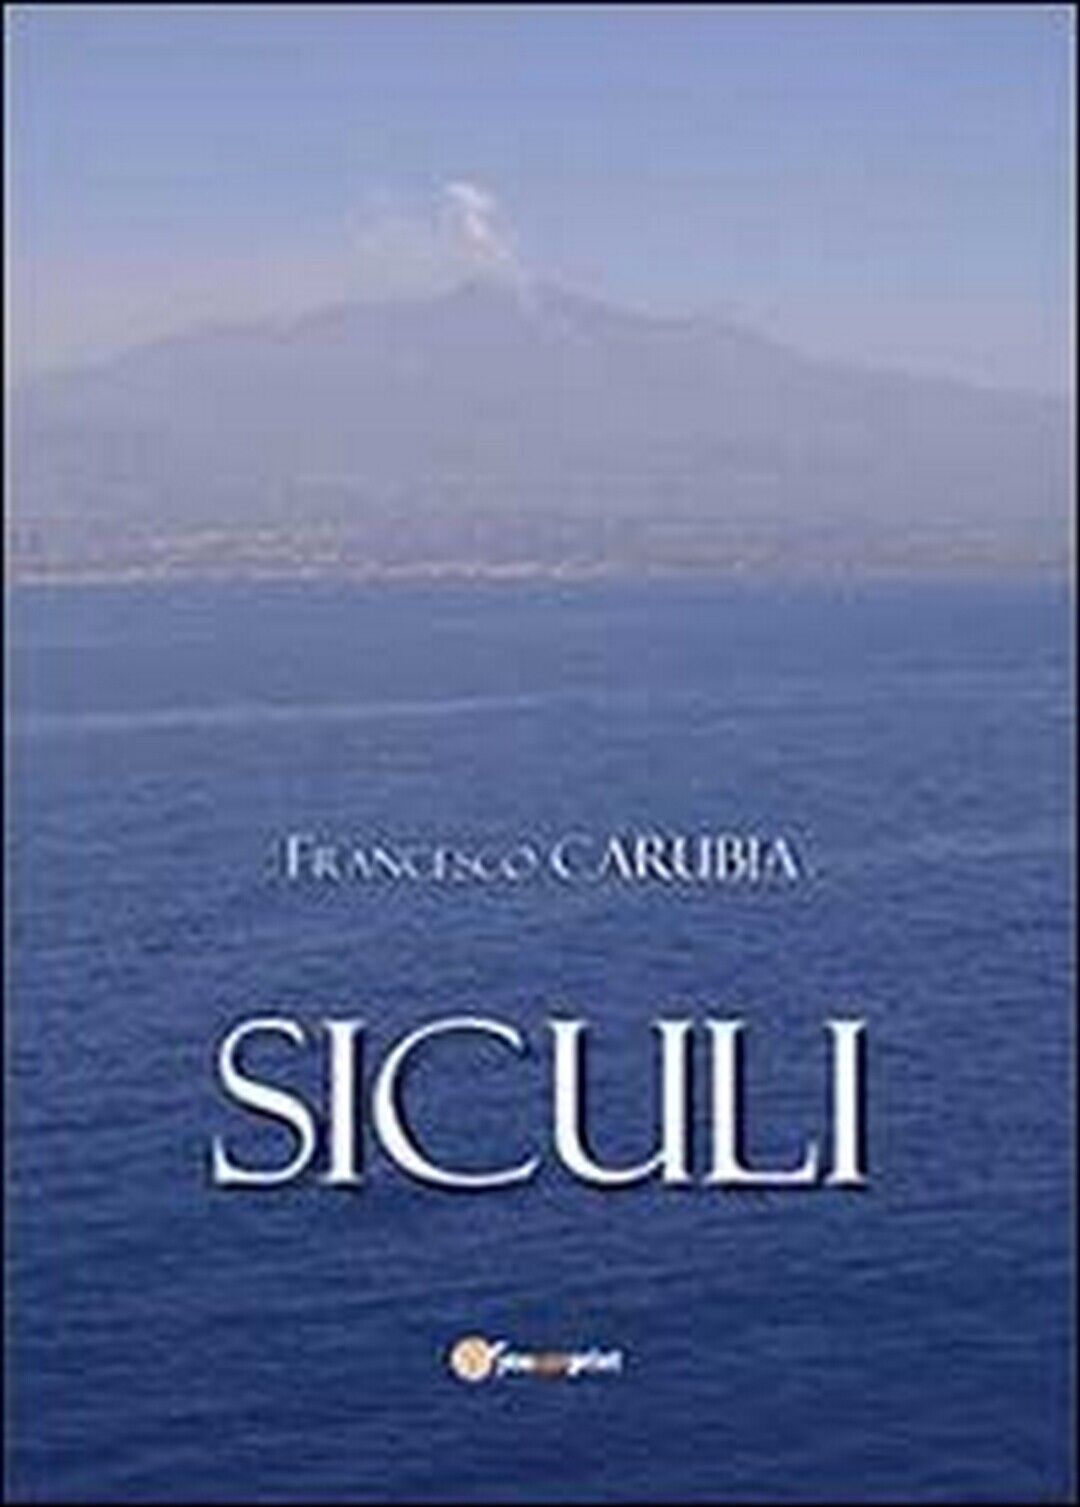 Siculi  - Francesco Carubia,  2013,  Youcanprint